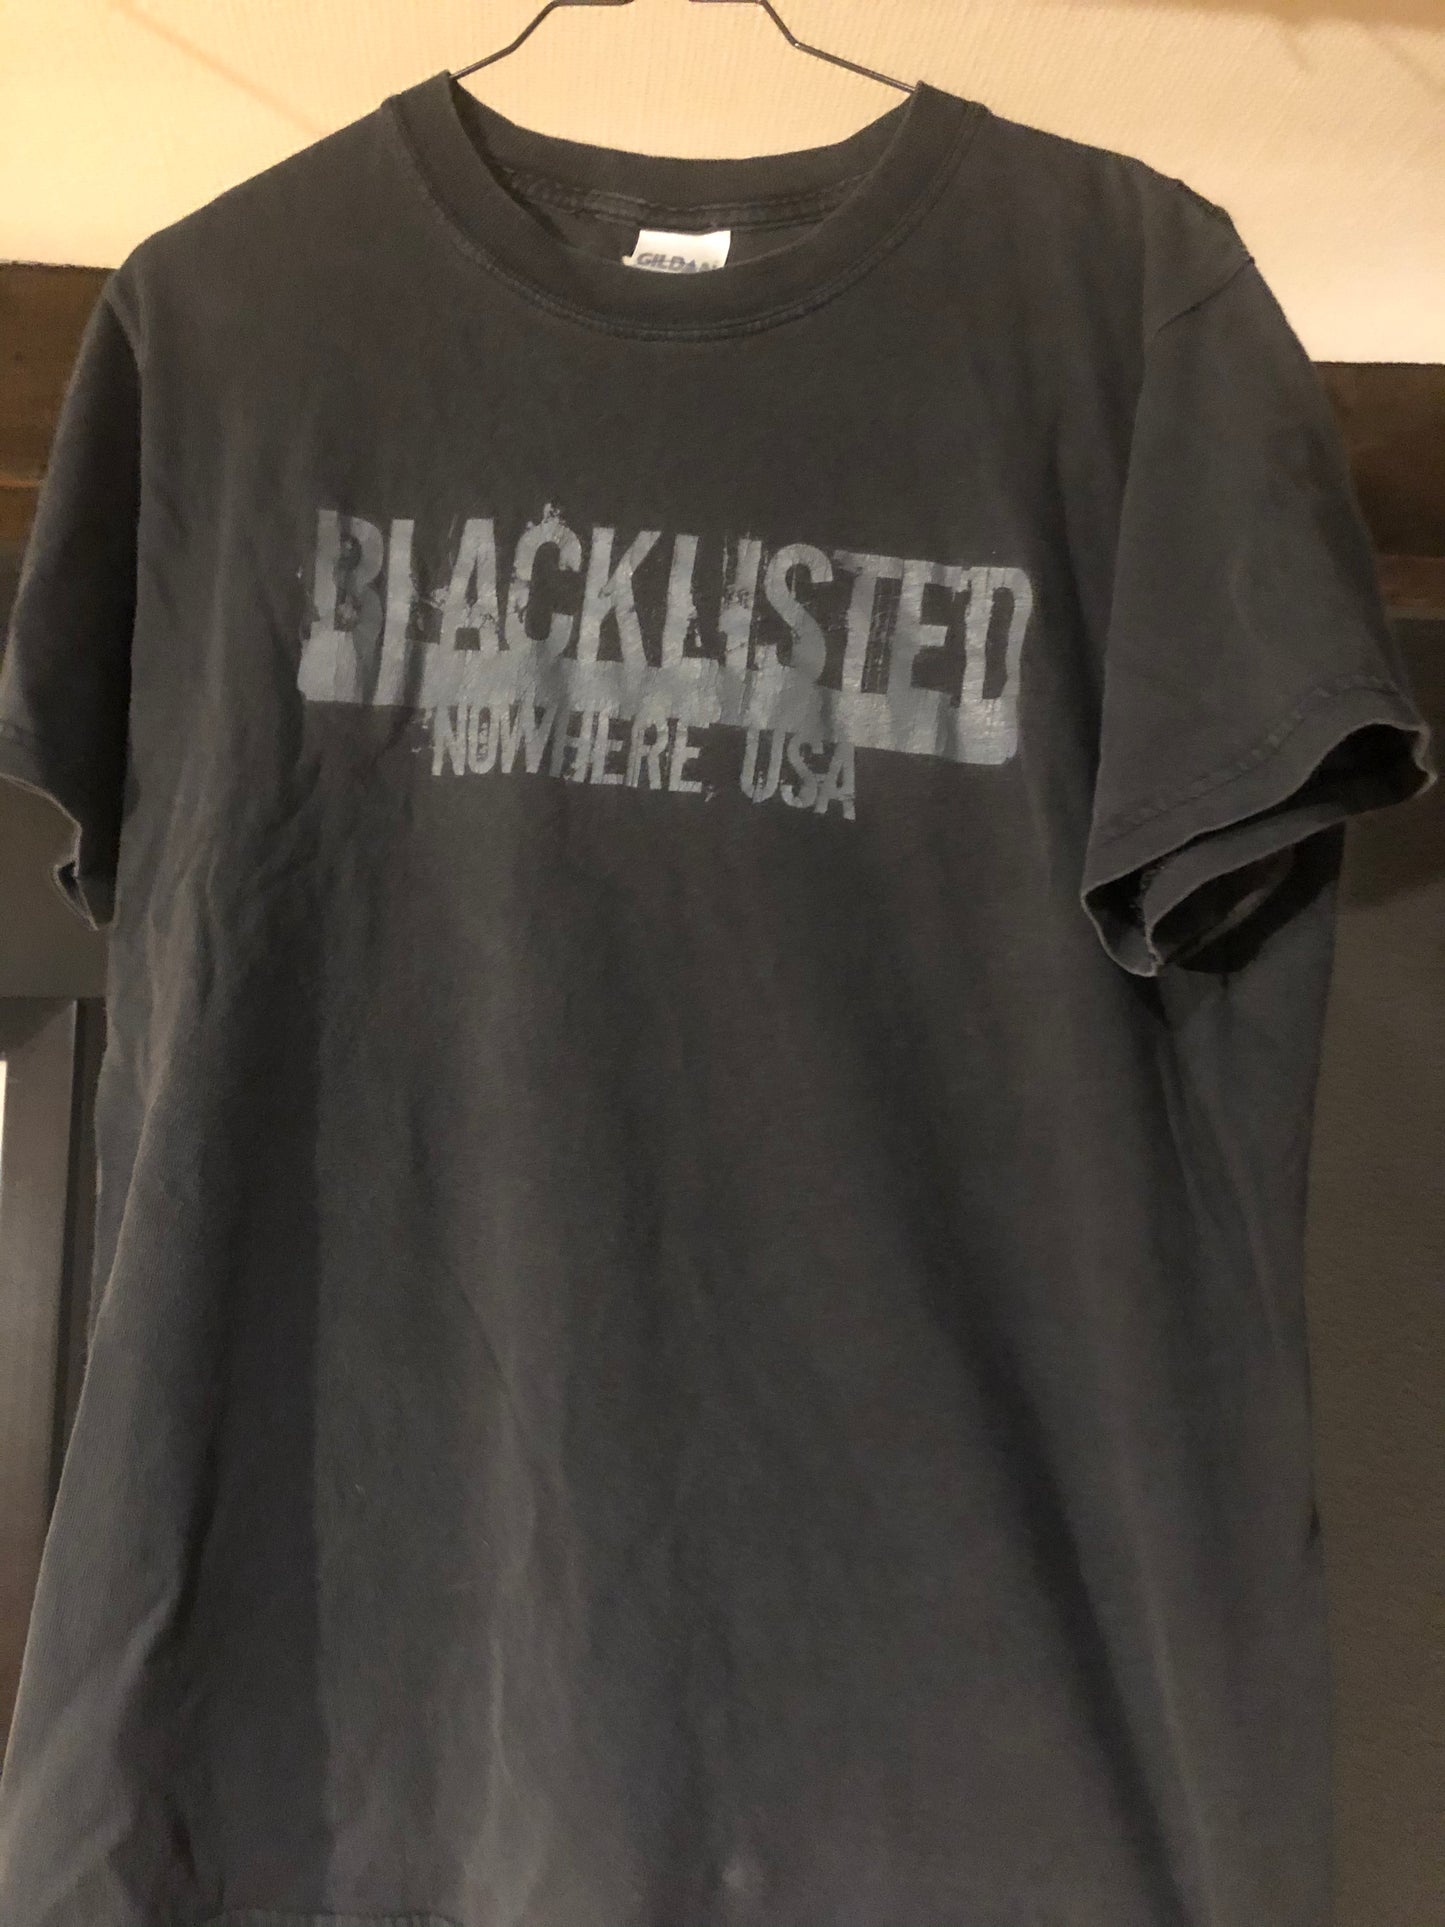 BLACKLISTED • nowhere, usa • T-Shirt